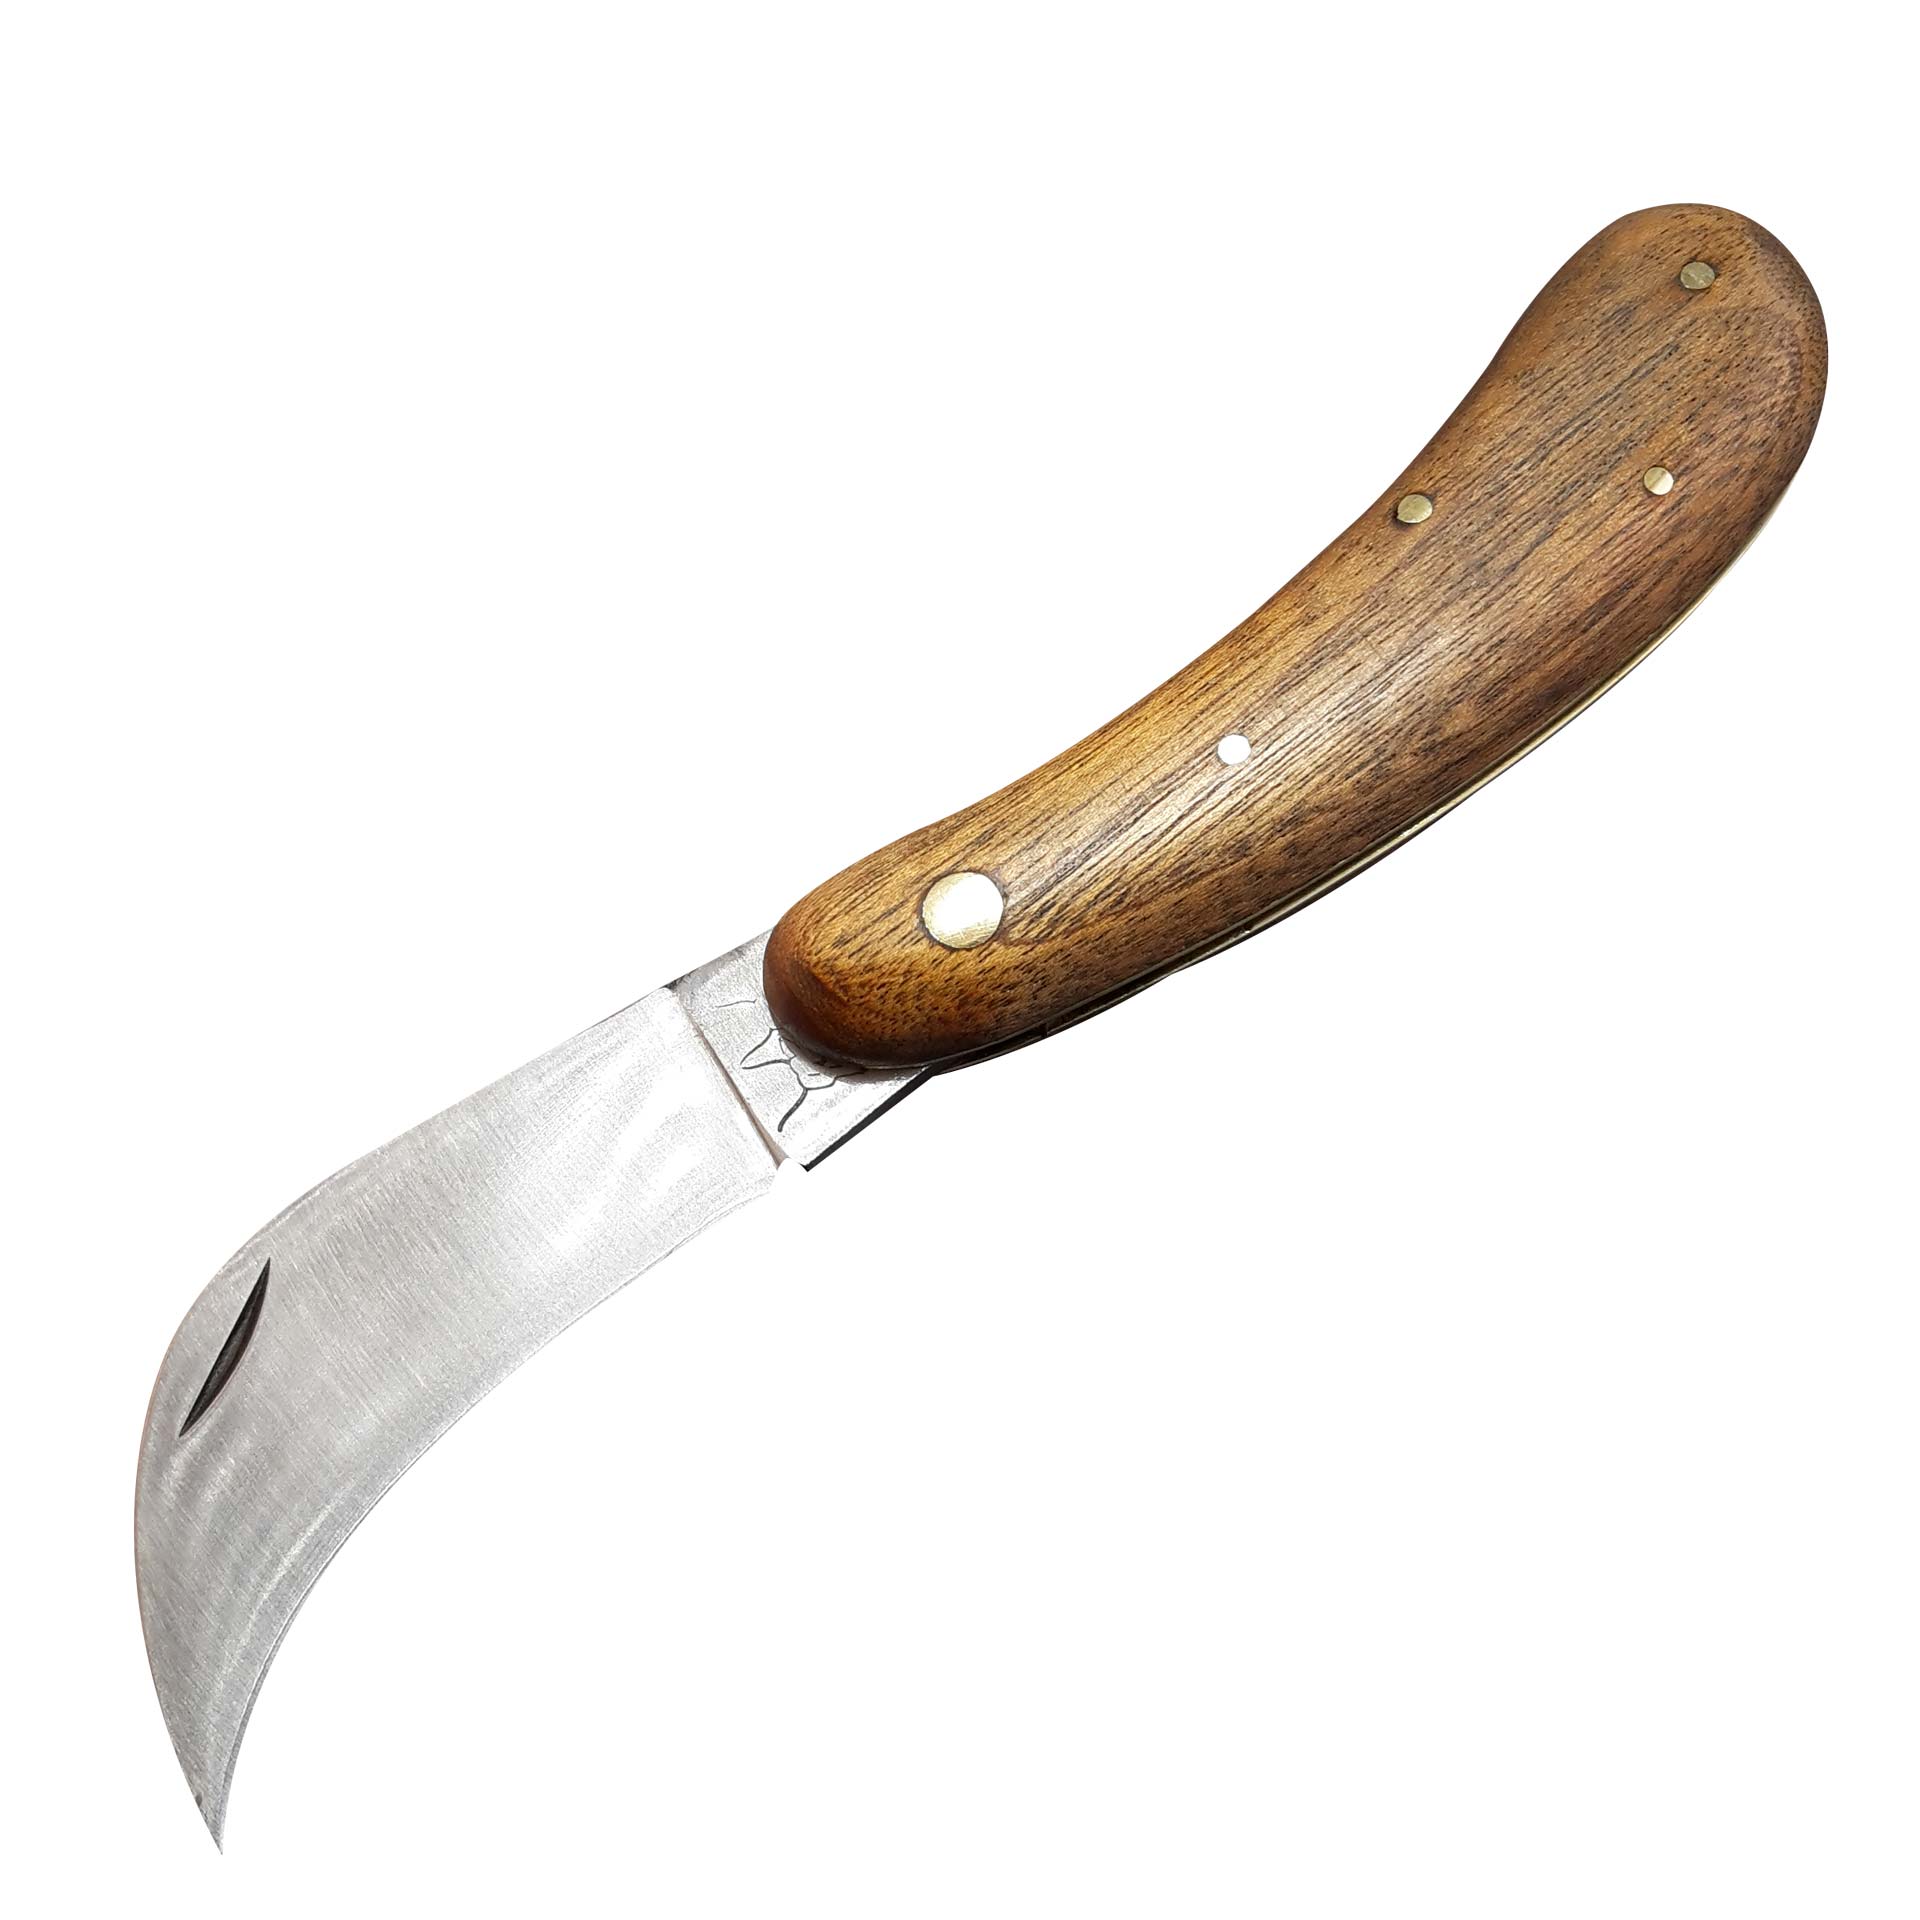 Нож с изогнутым лезвием. Нож due buoi. Нож садовый прививочный (GD-11829). Нож садовый прививочный 170мм Skrab. Нож садовый копулировочный/PALISAD.